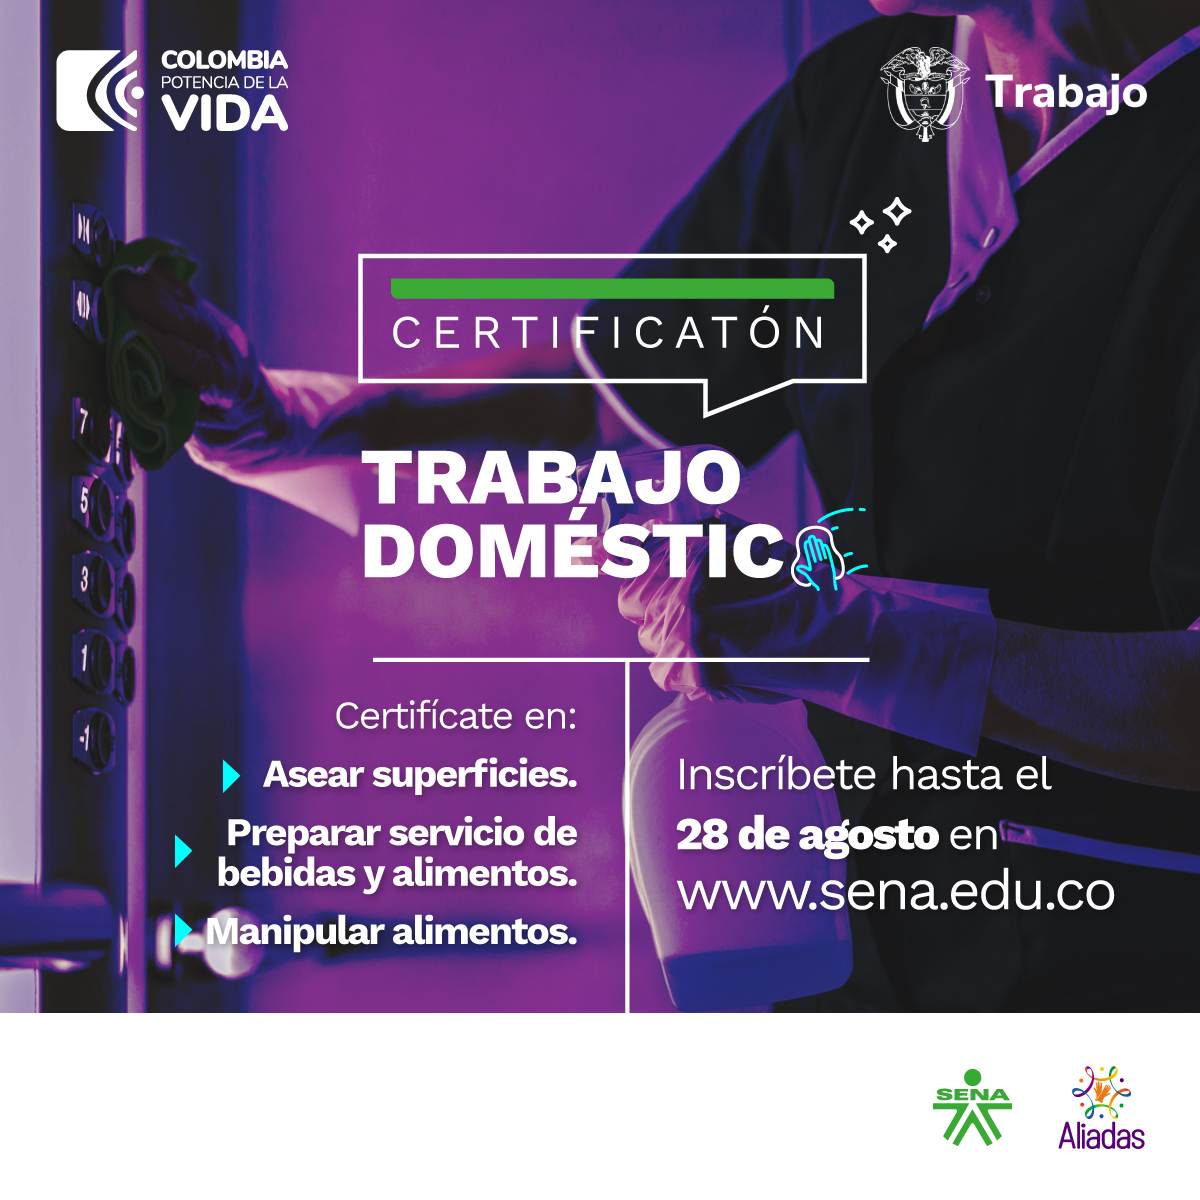 image for Certificatón